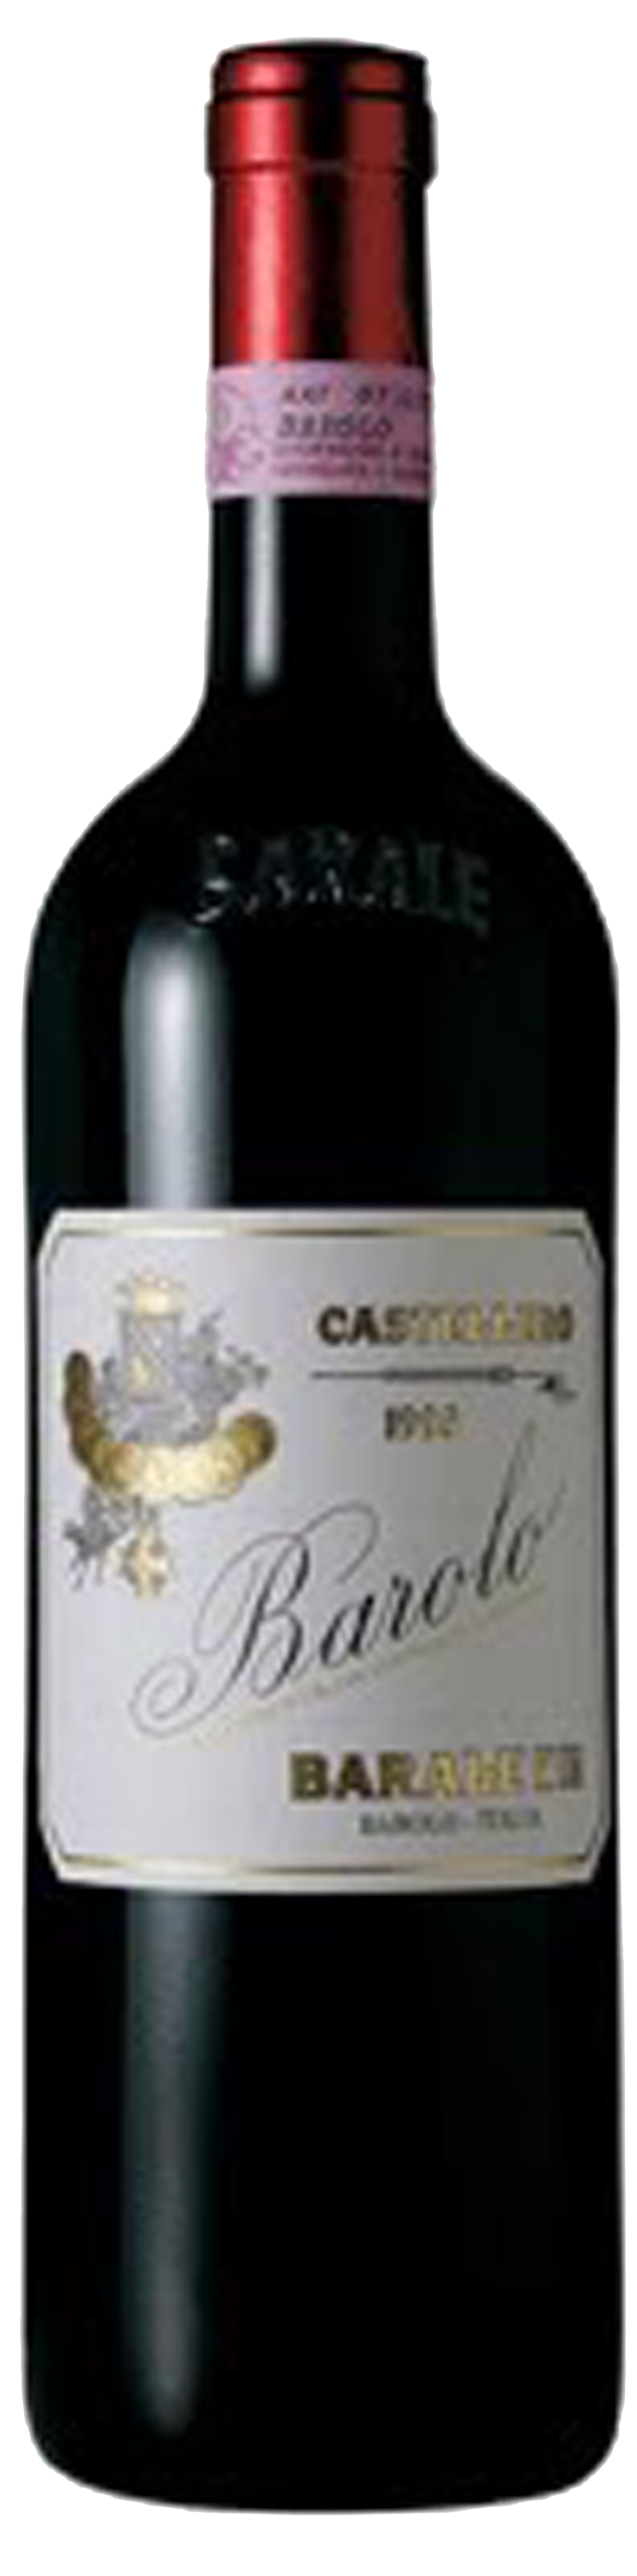 Bottle shot of 2010 Barolo Castellero